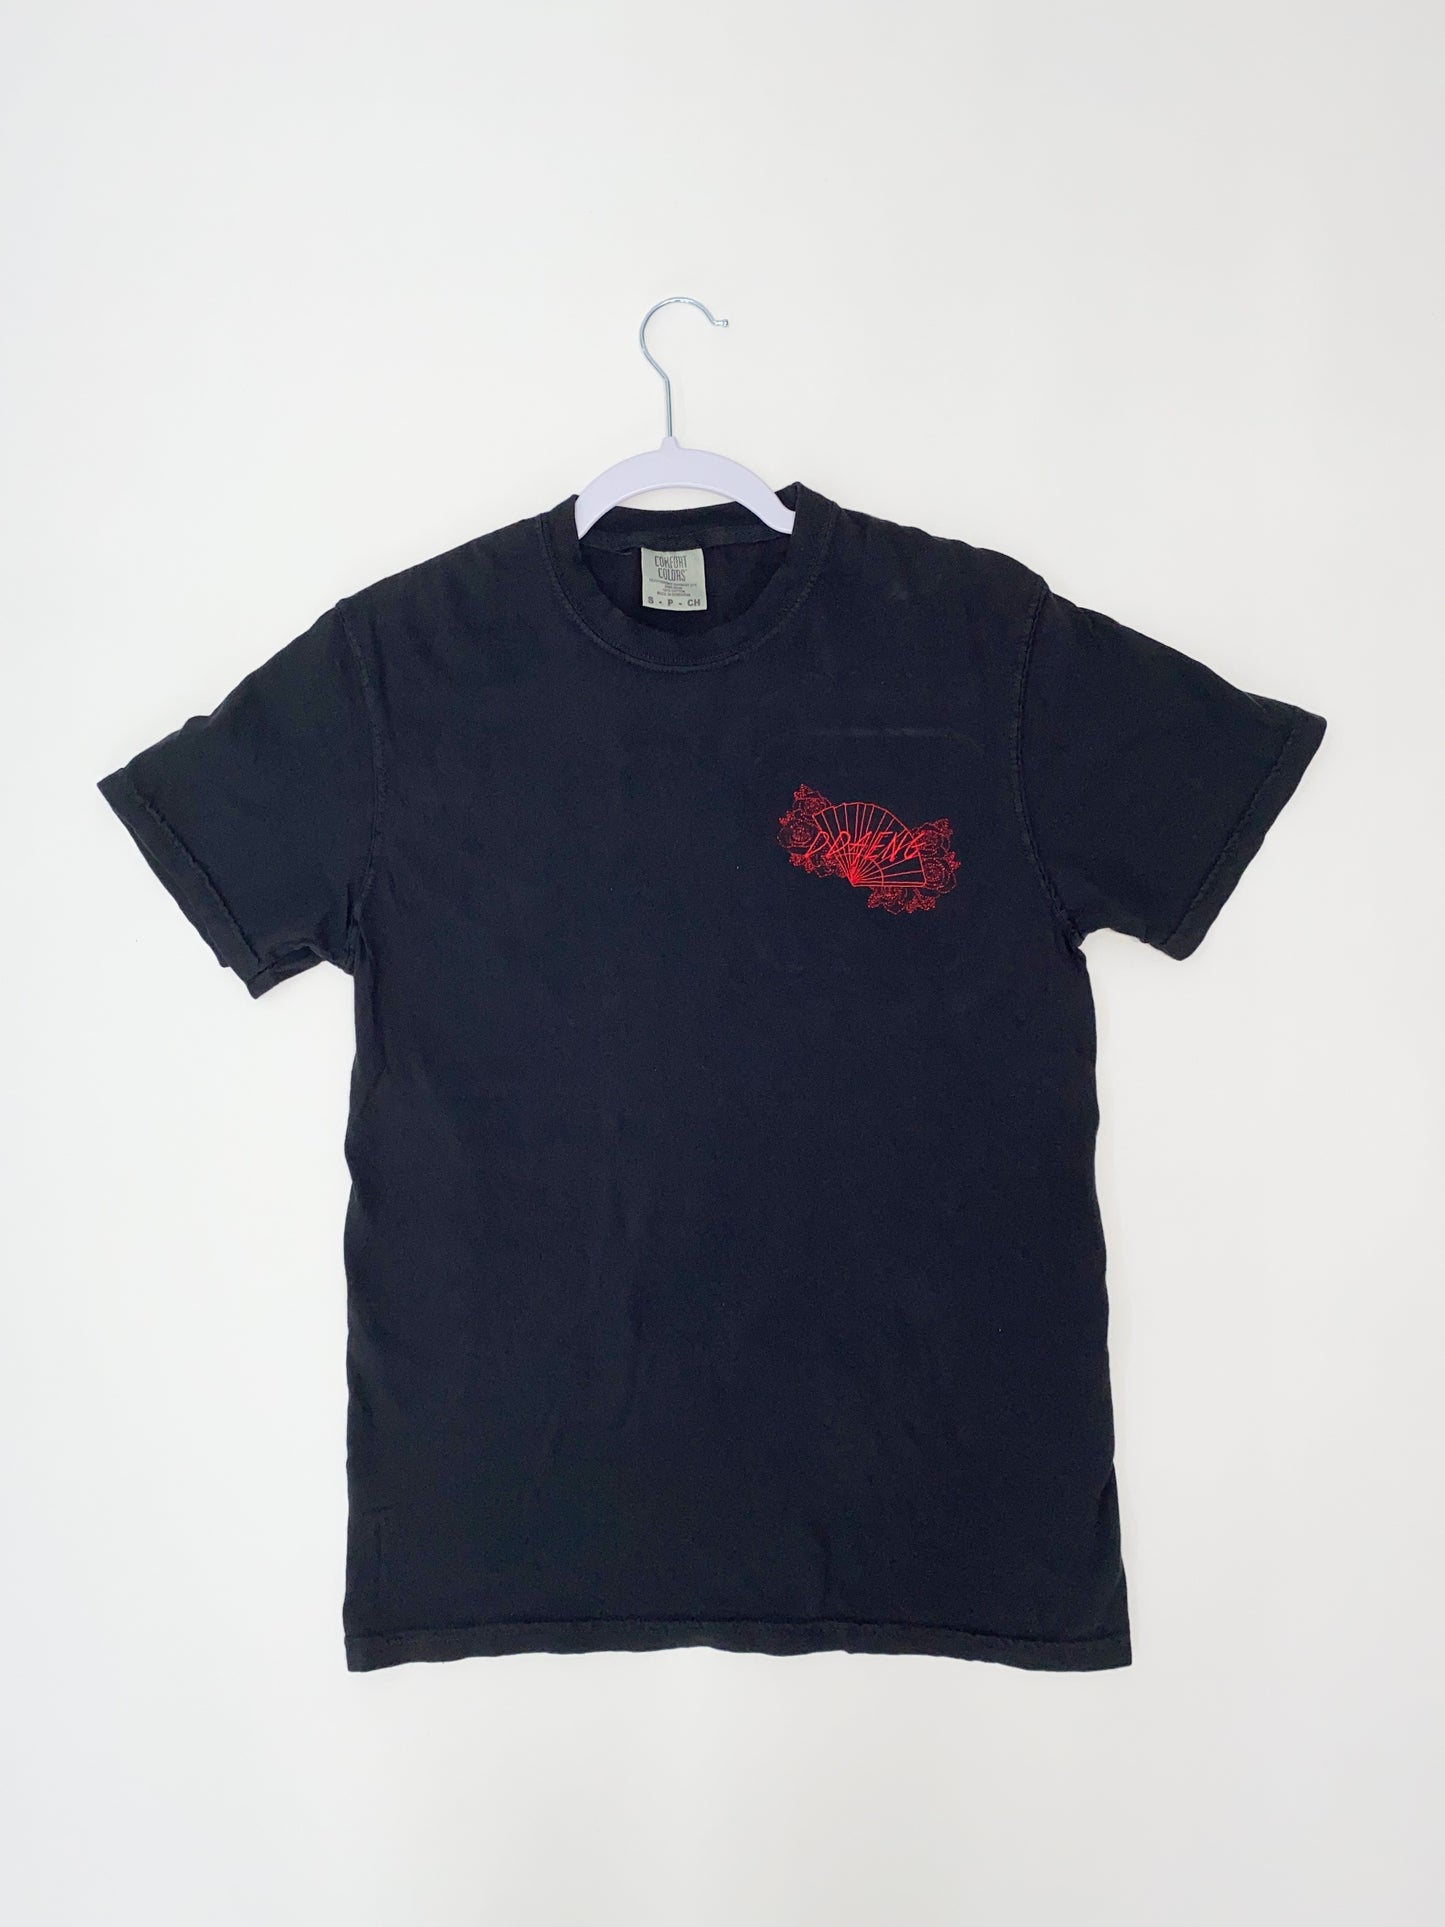 Ddaeng Embroidered T-Shirt